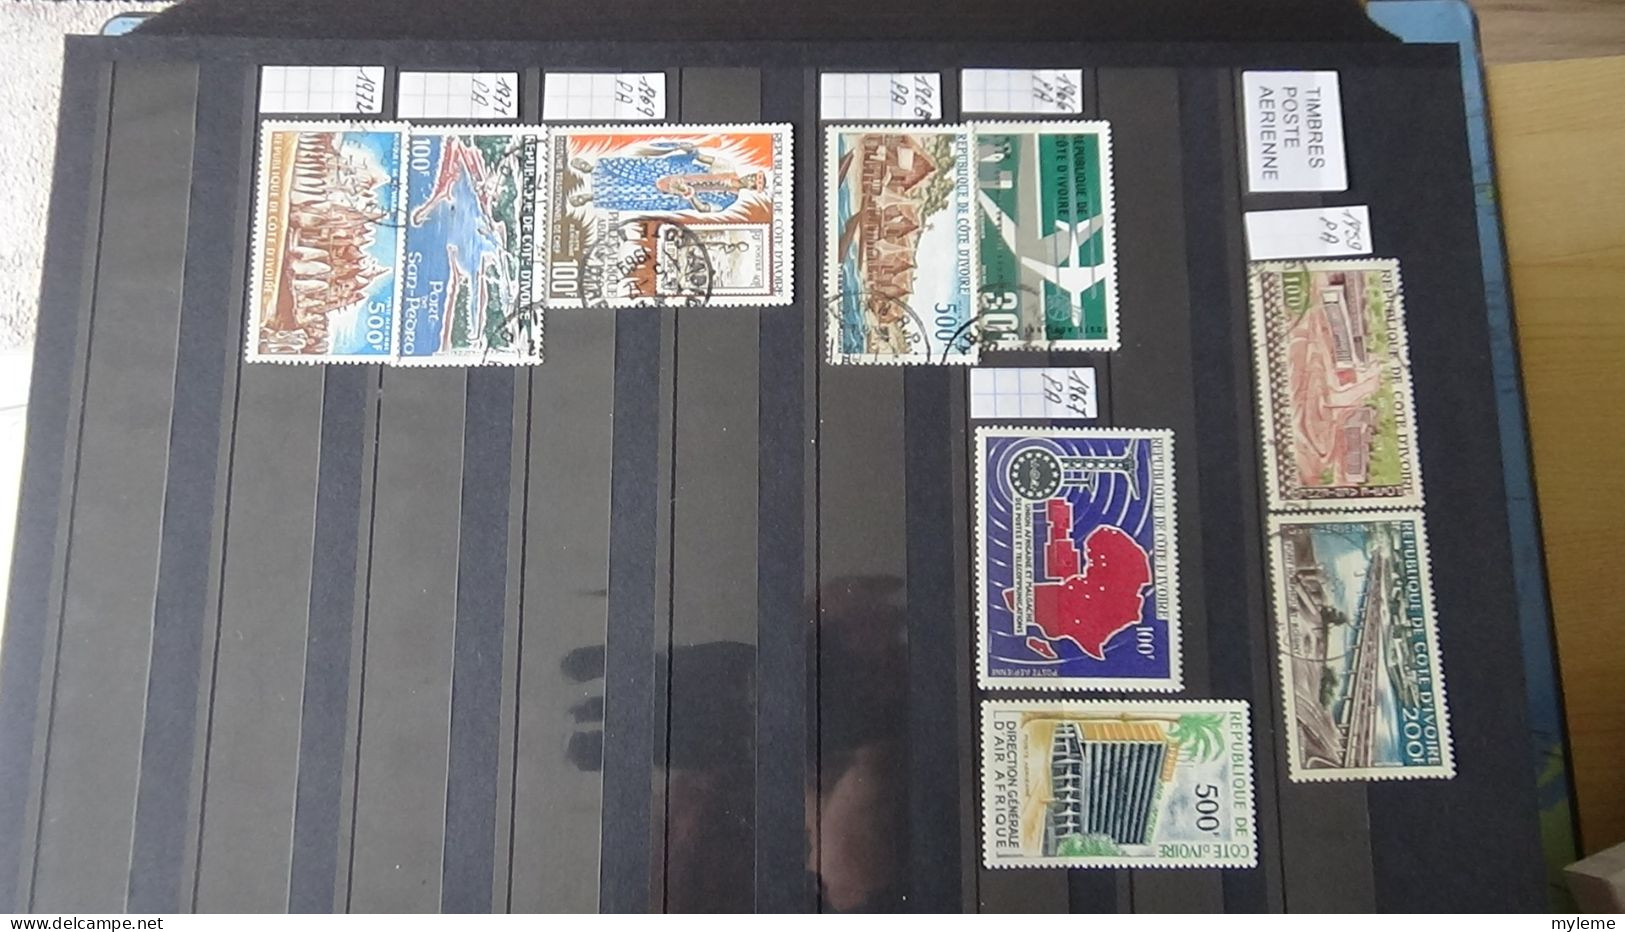 BG1 Ensemble de timbres de divers pays + 10 timbres Italie N° 2370Aa ** Cote 2500 euros. A saisir !!!